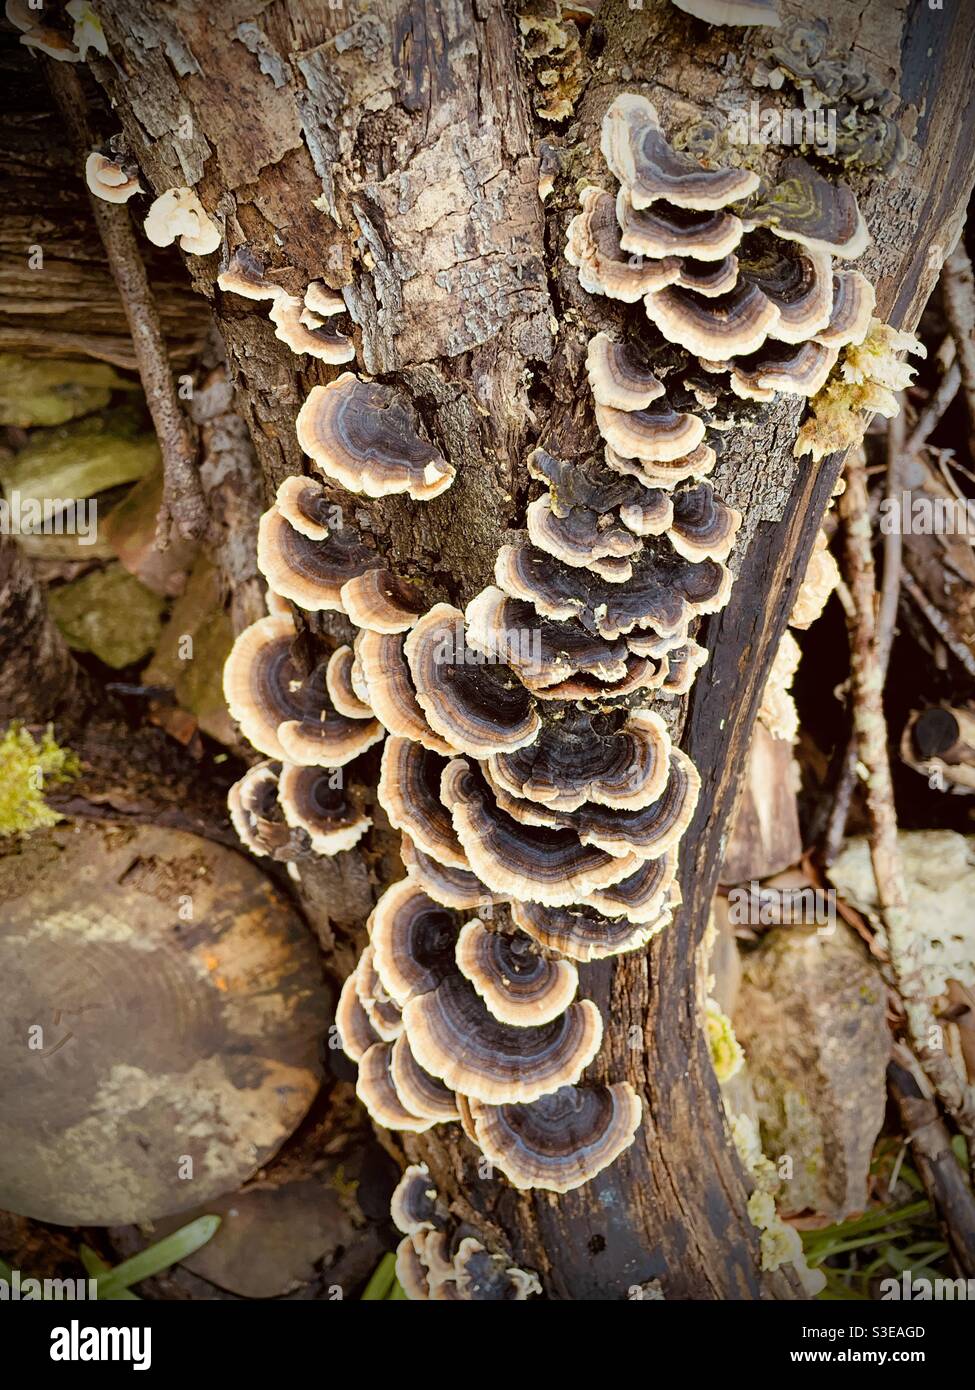 Bracket fungus Trametes versicolor growing on rotting tree branch Stock Photo